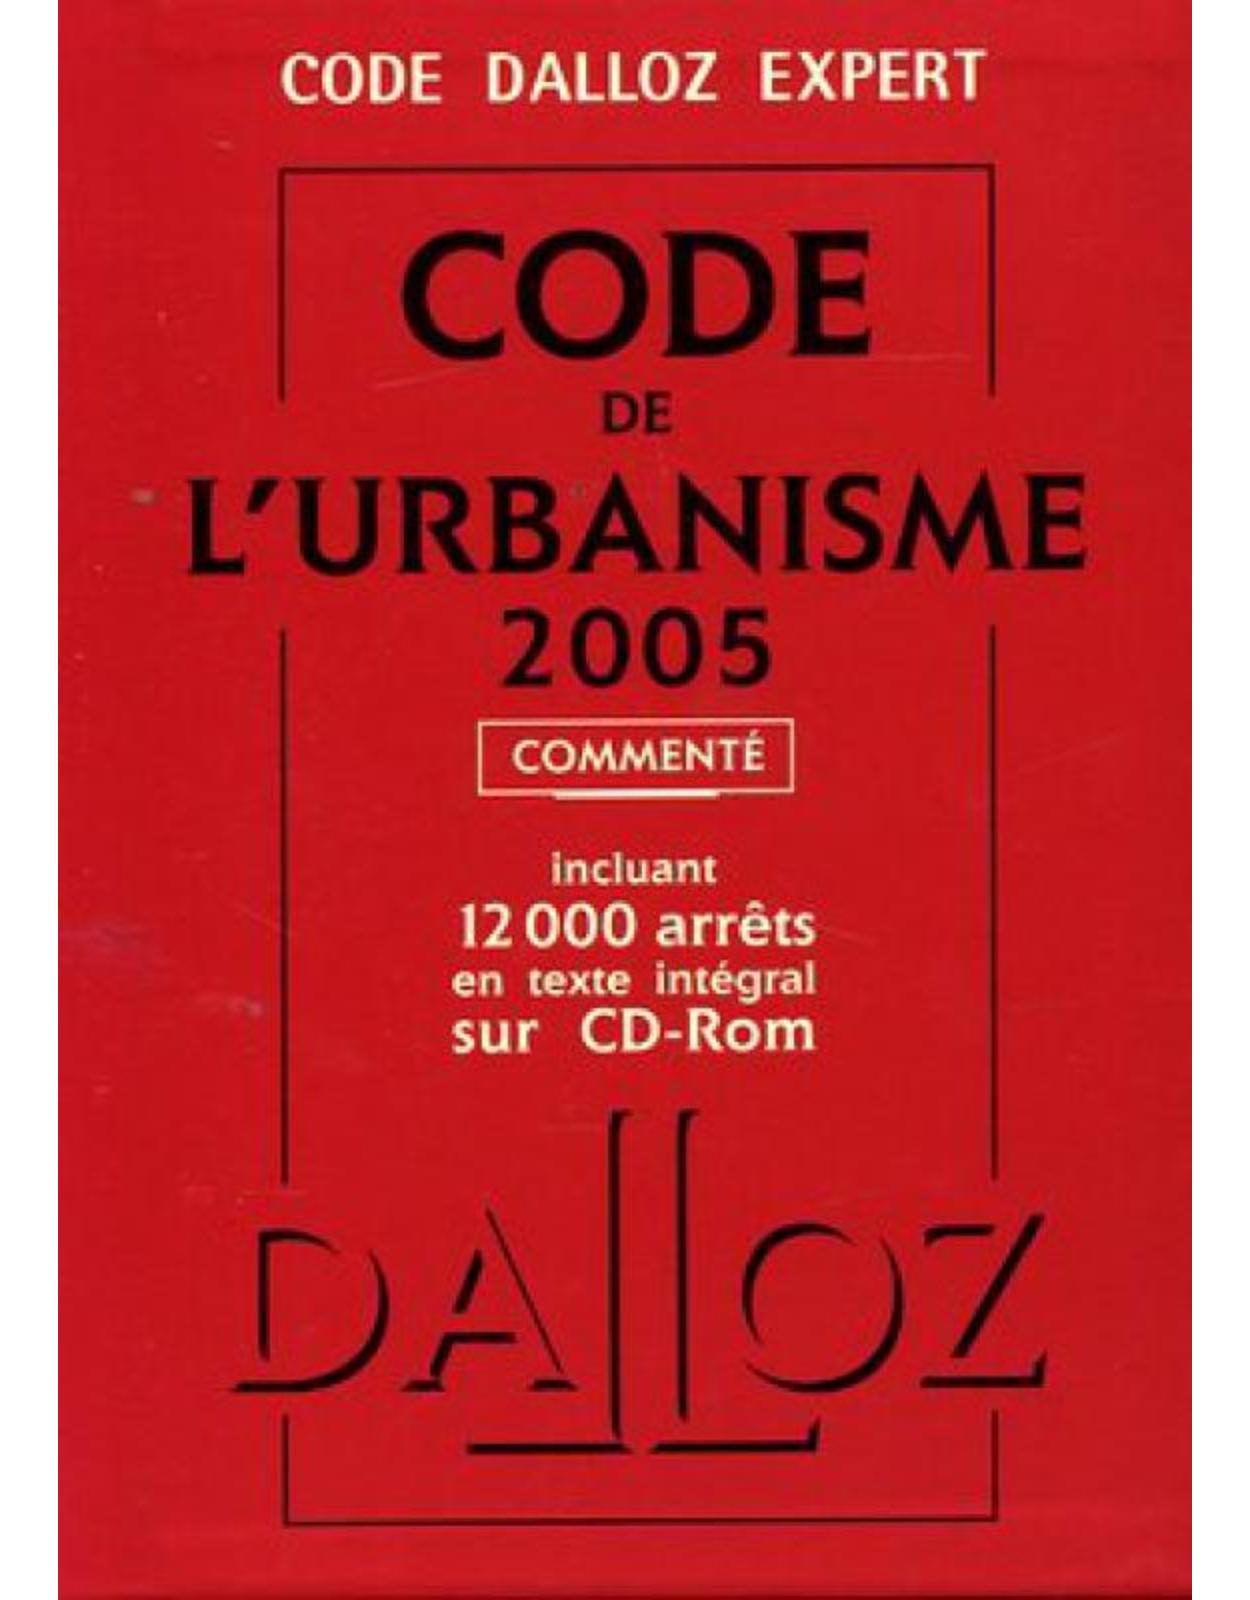 Code Dalloz Expert. Code de l'urbanisme 2005 (plus CD)